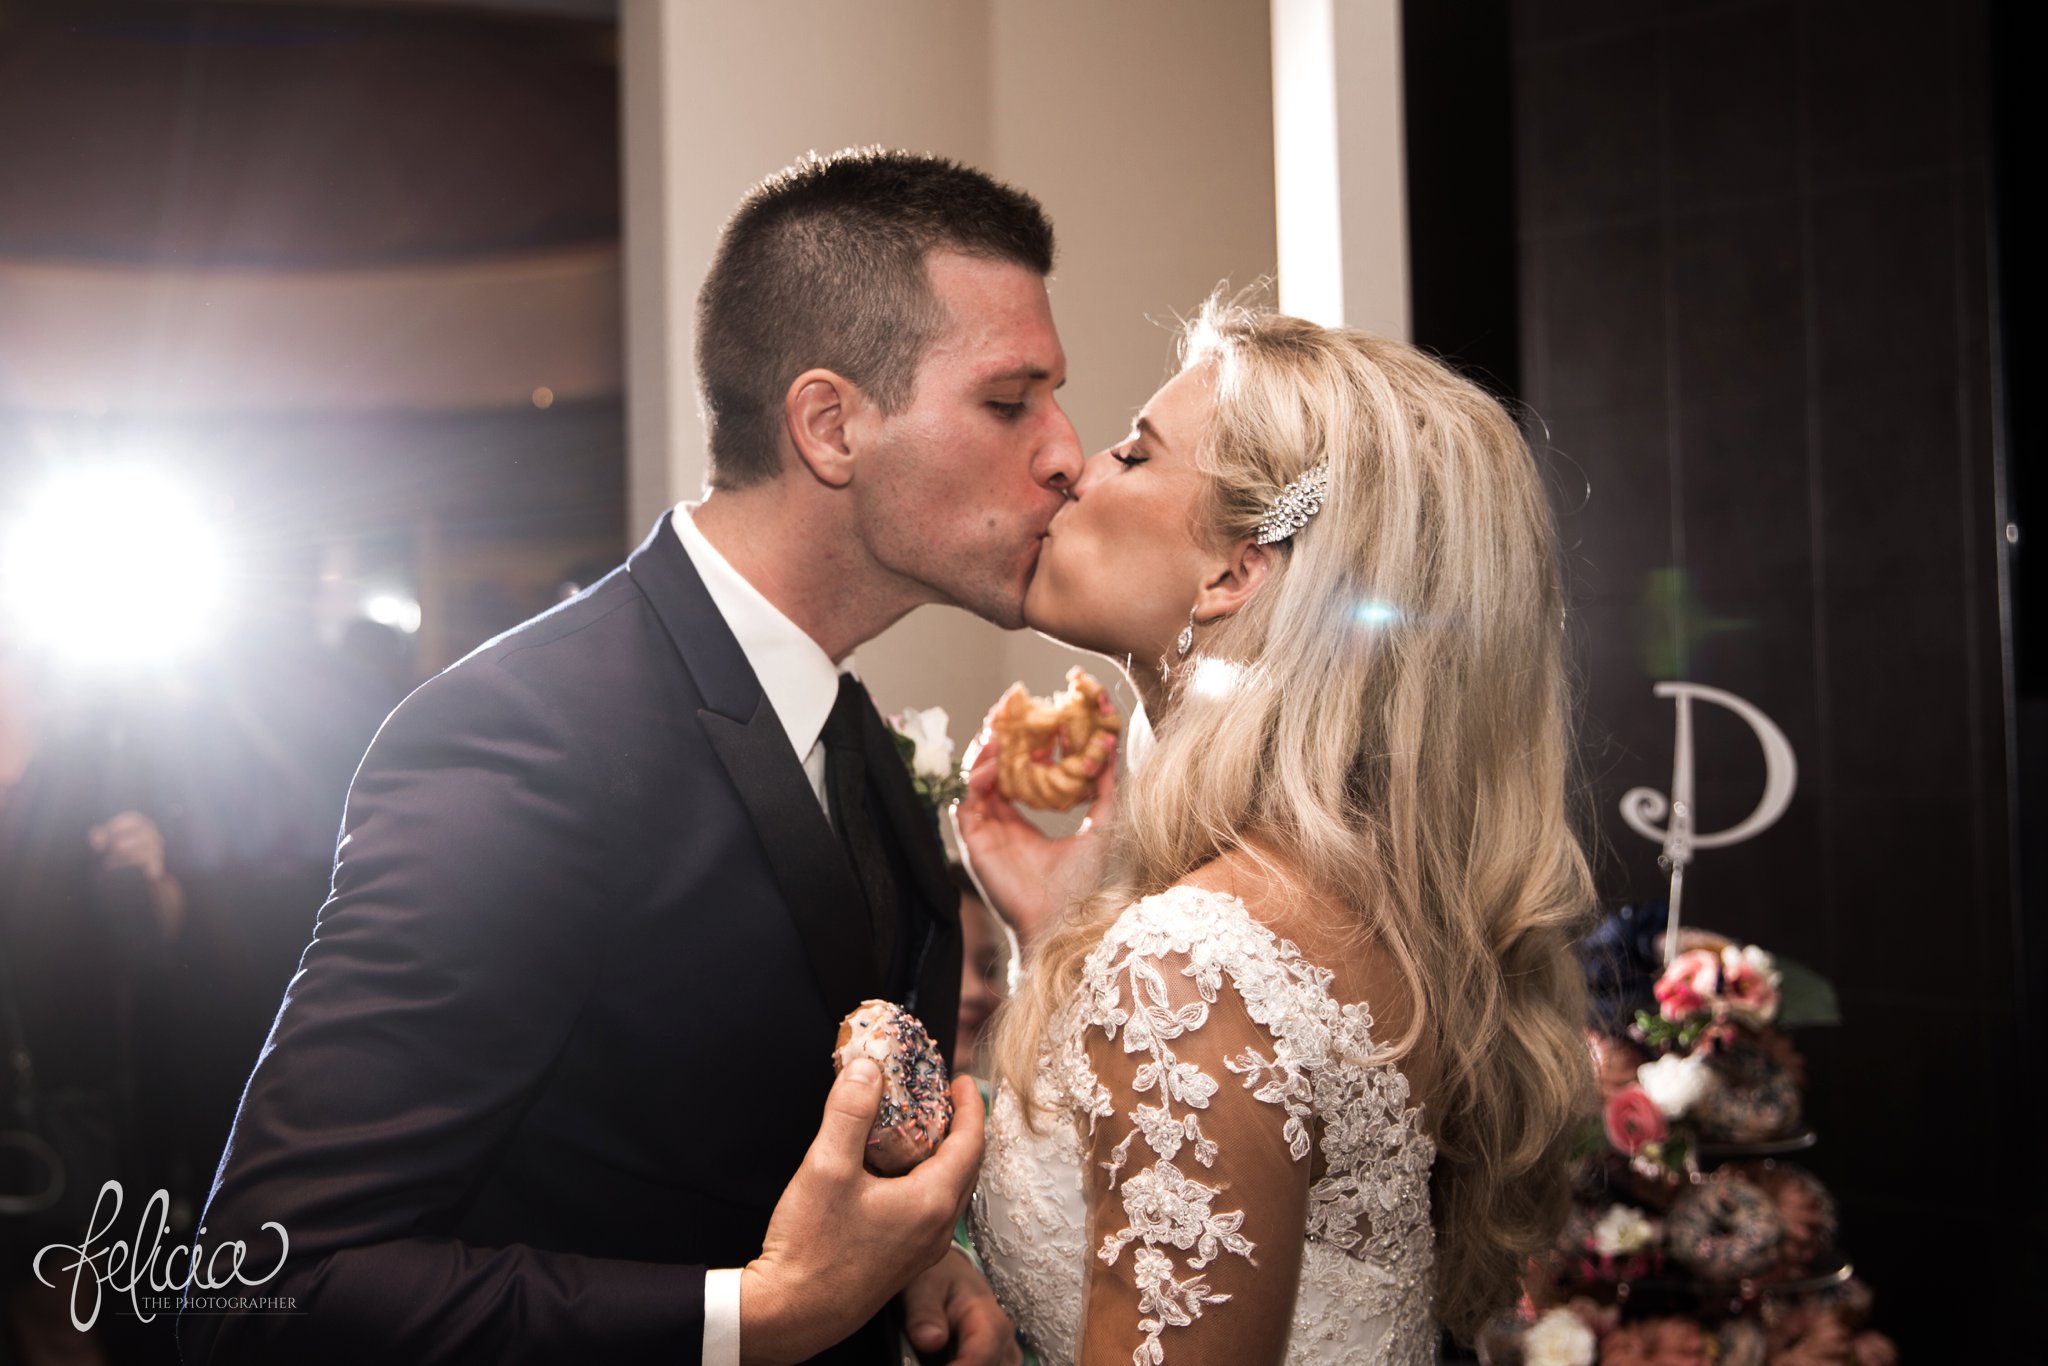 images by feliciathephotographer.com | wedding photographer | kansas city | redemptorist | classic | lace dress | reception | royal room | romantic | cutting the cake | donut king |